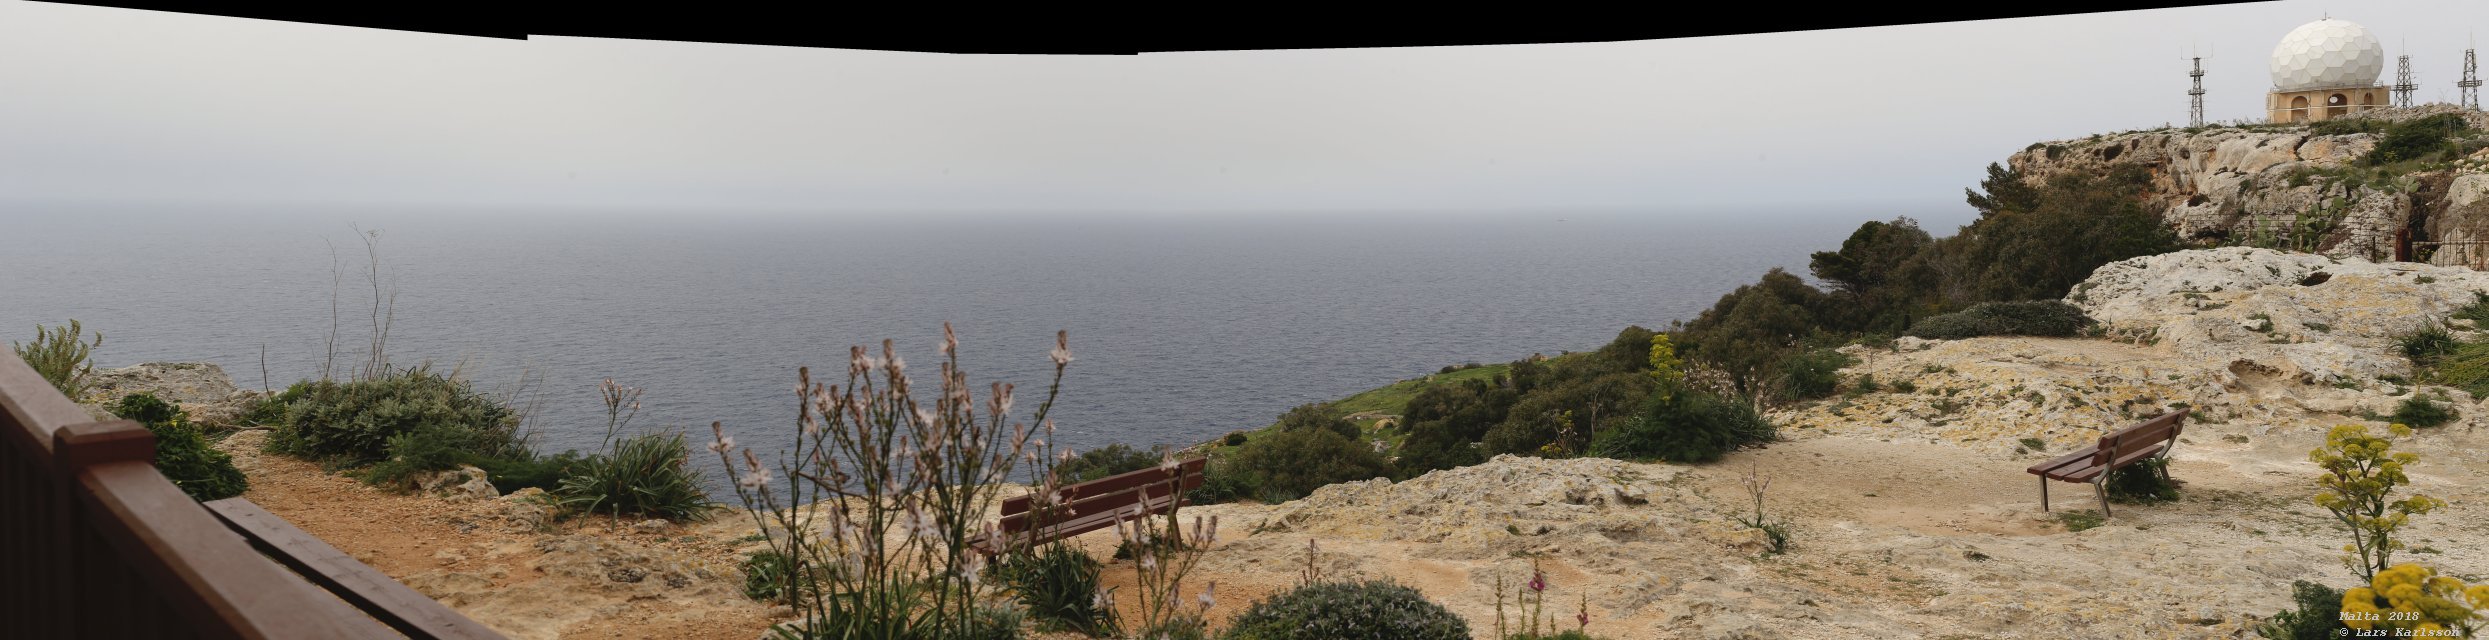 Malta, Western coast